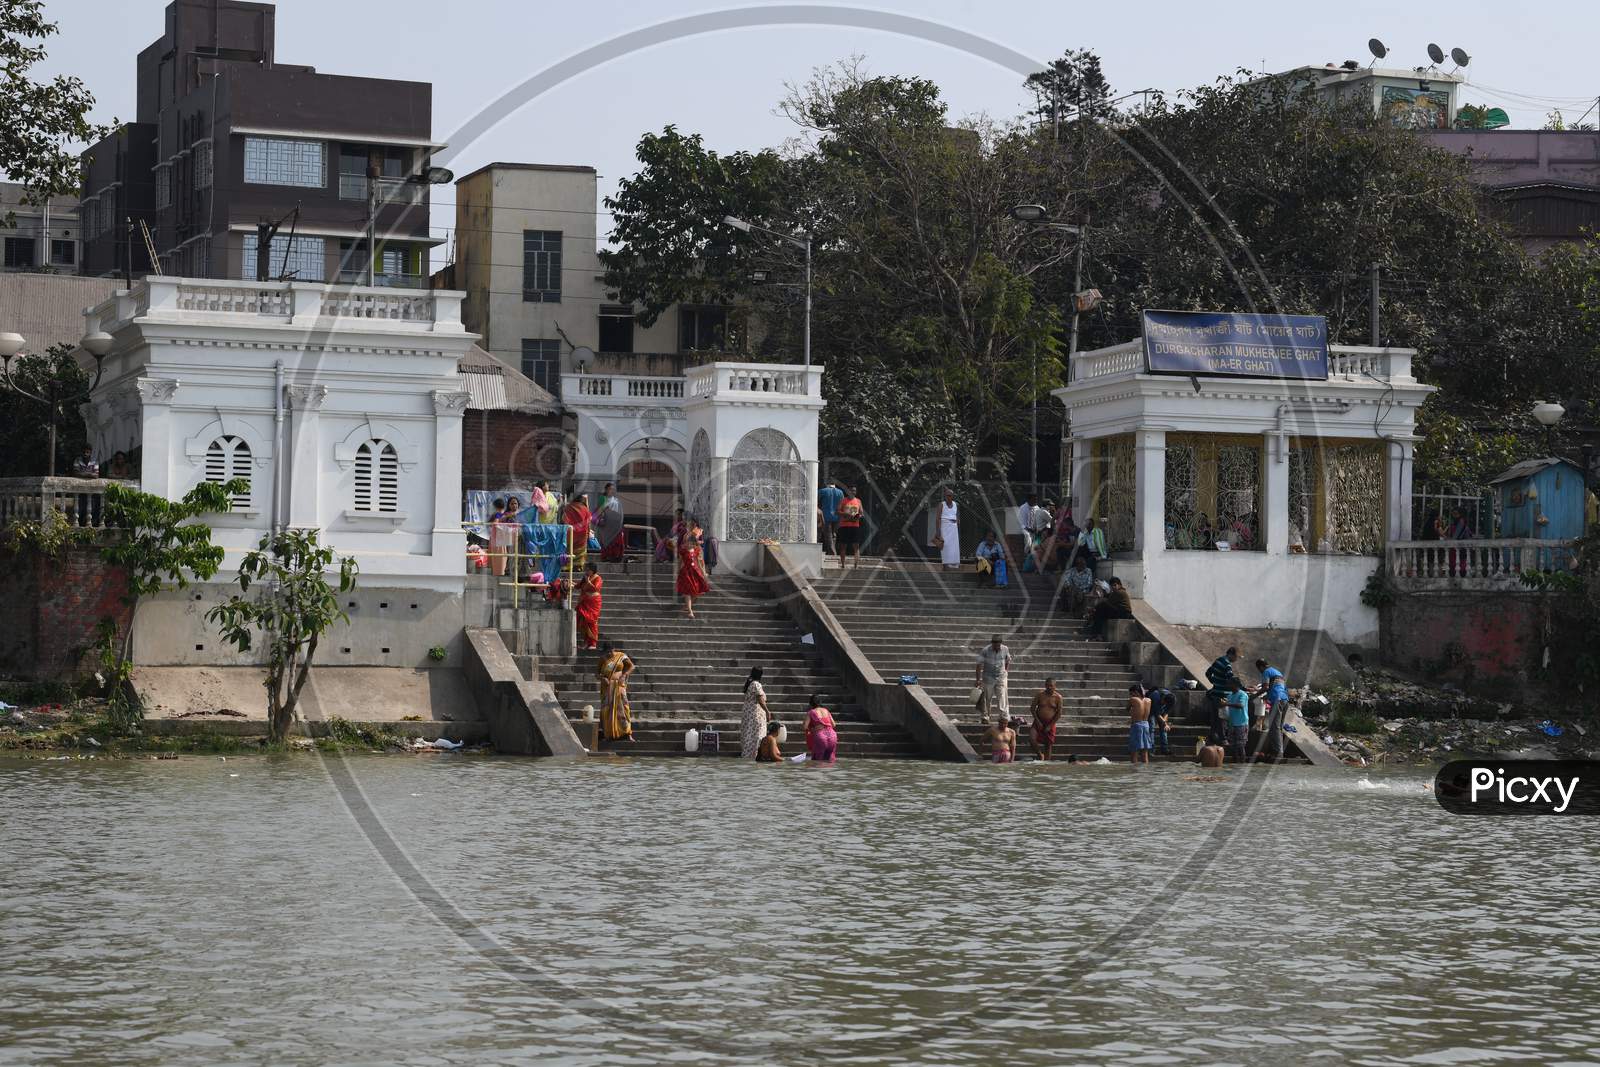 People Bathing On The Bank Of Hooghly River  At  Durga Charan Mukherjee  Ghat In Kolkata